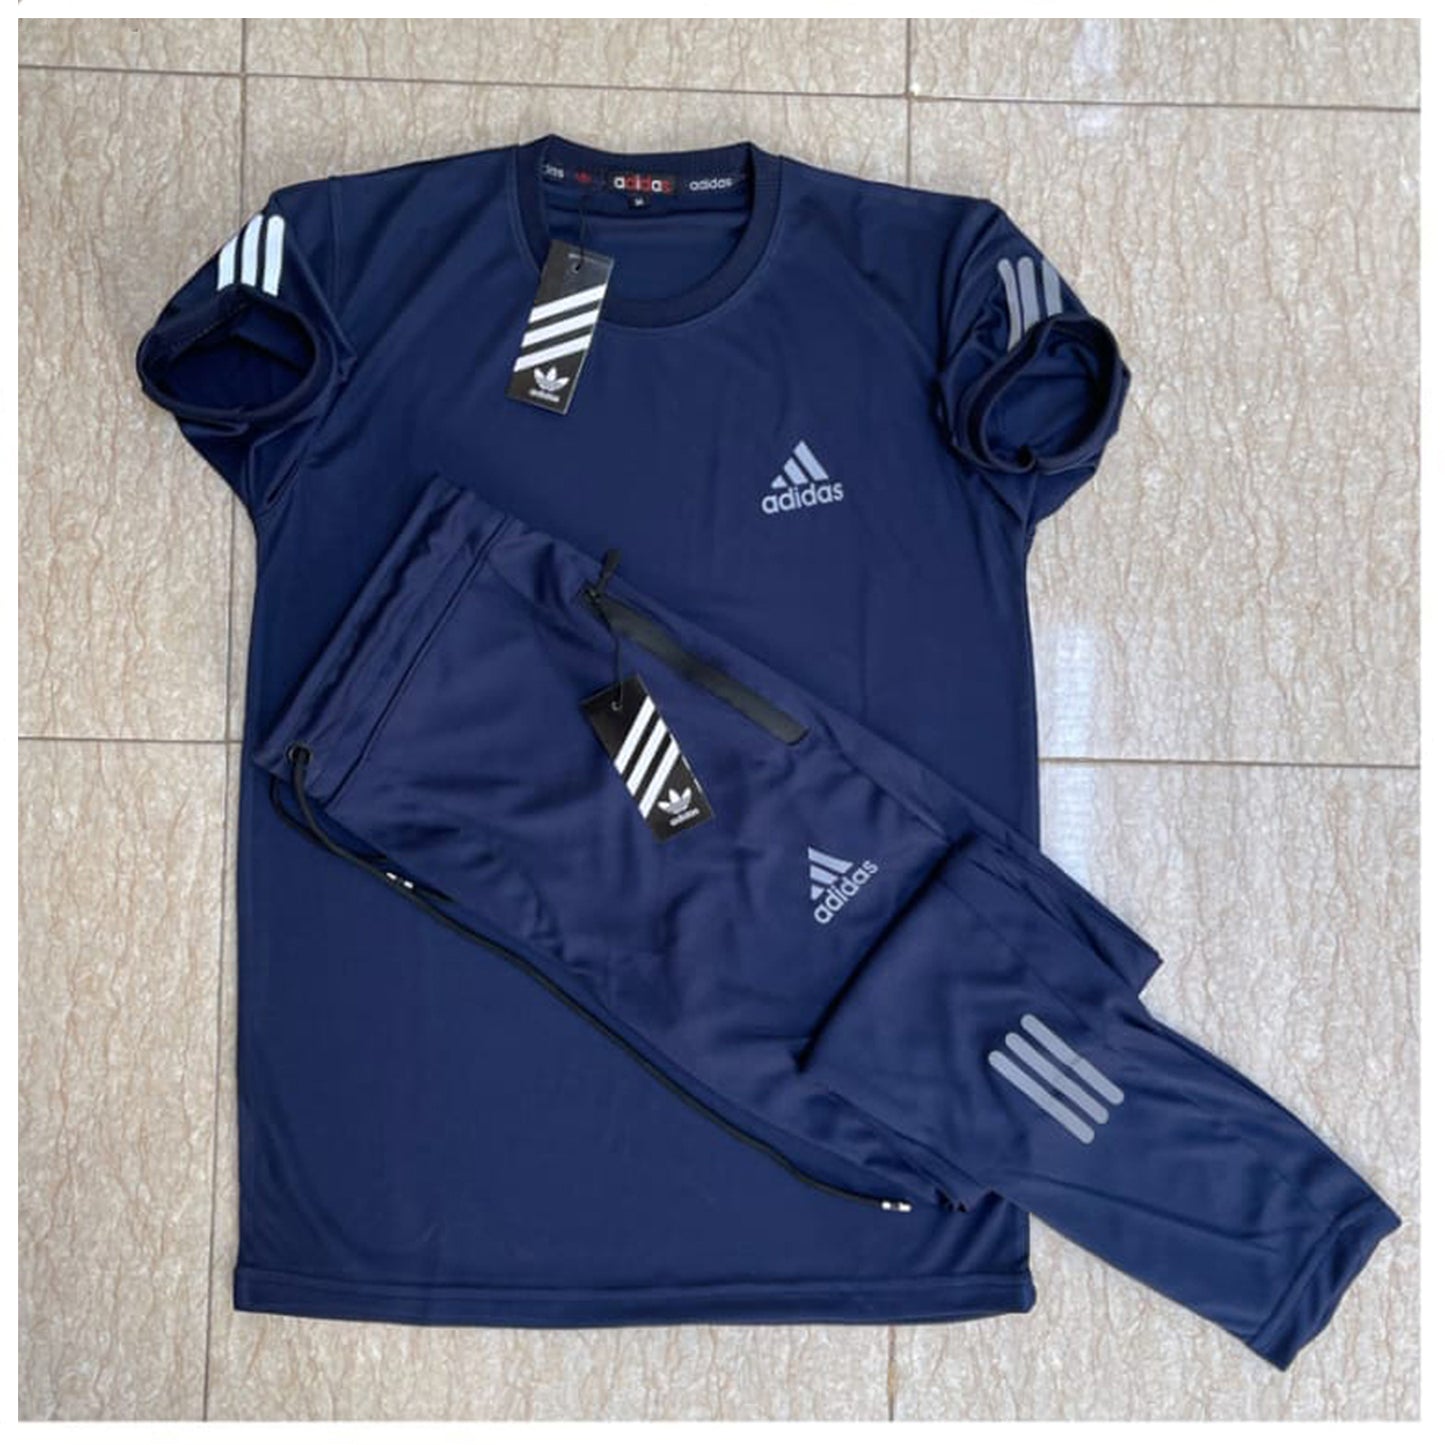 Adidas Three Stripes Tracksuit Navy Blue Color